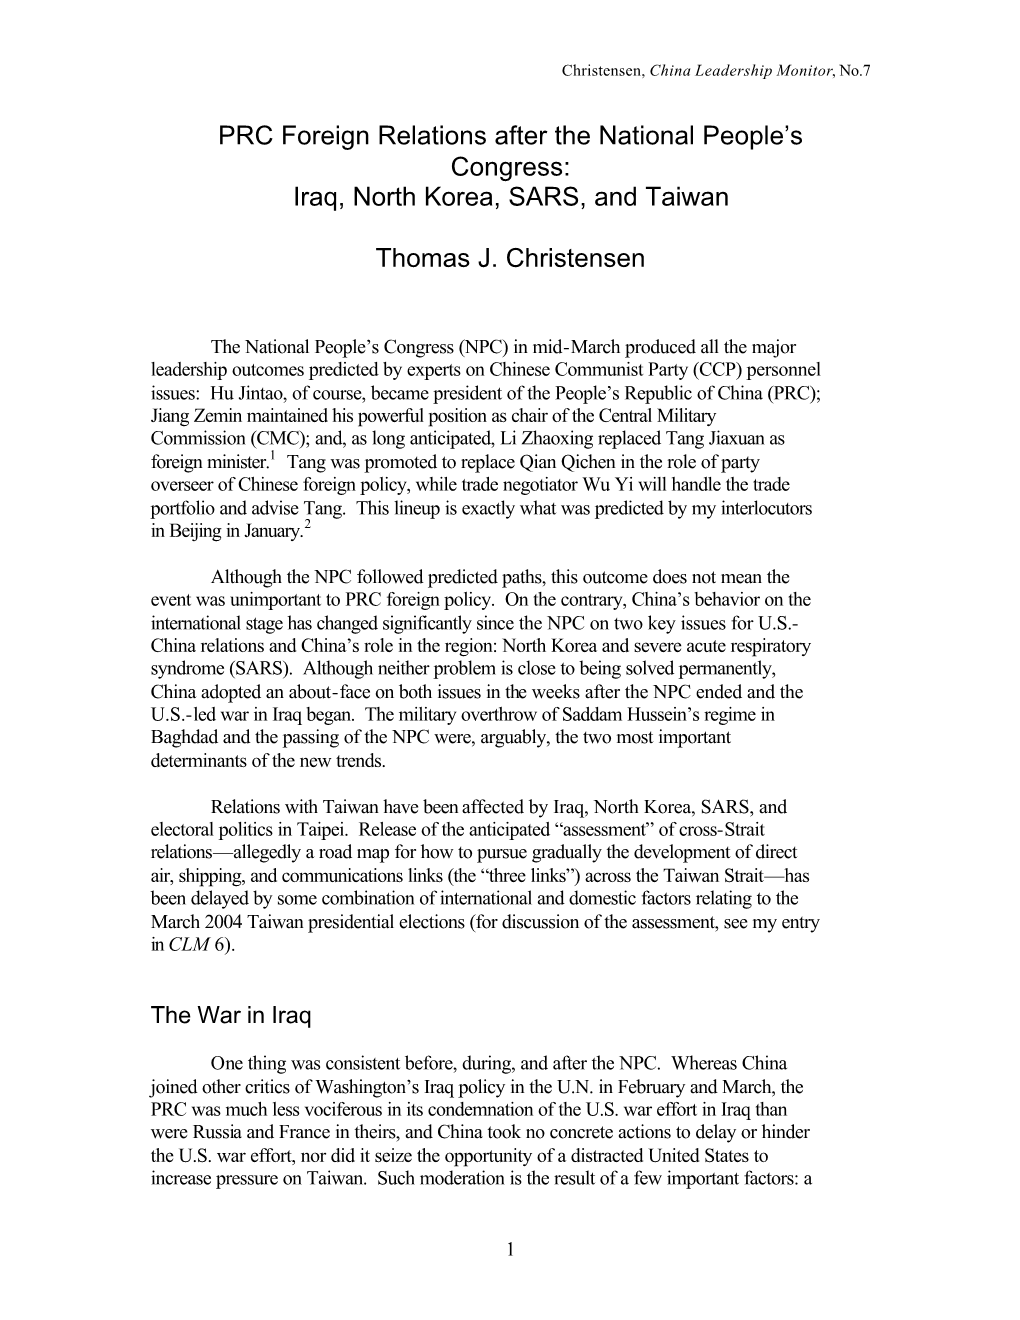 Iraq, North Korea, SARS, and Taiwan Thomas J. Christensen